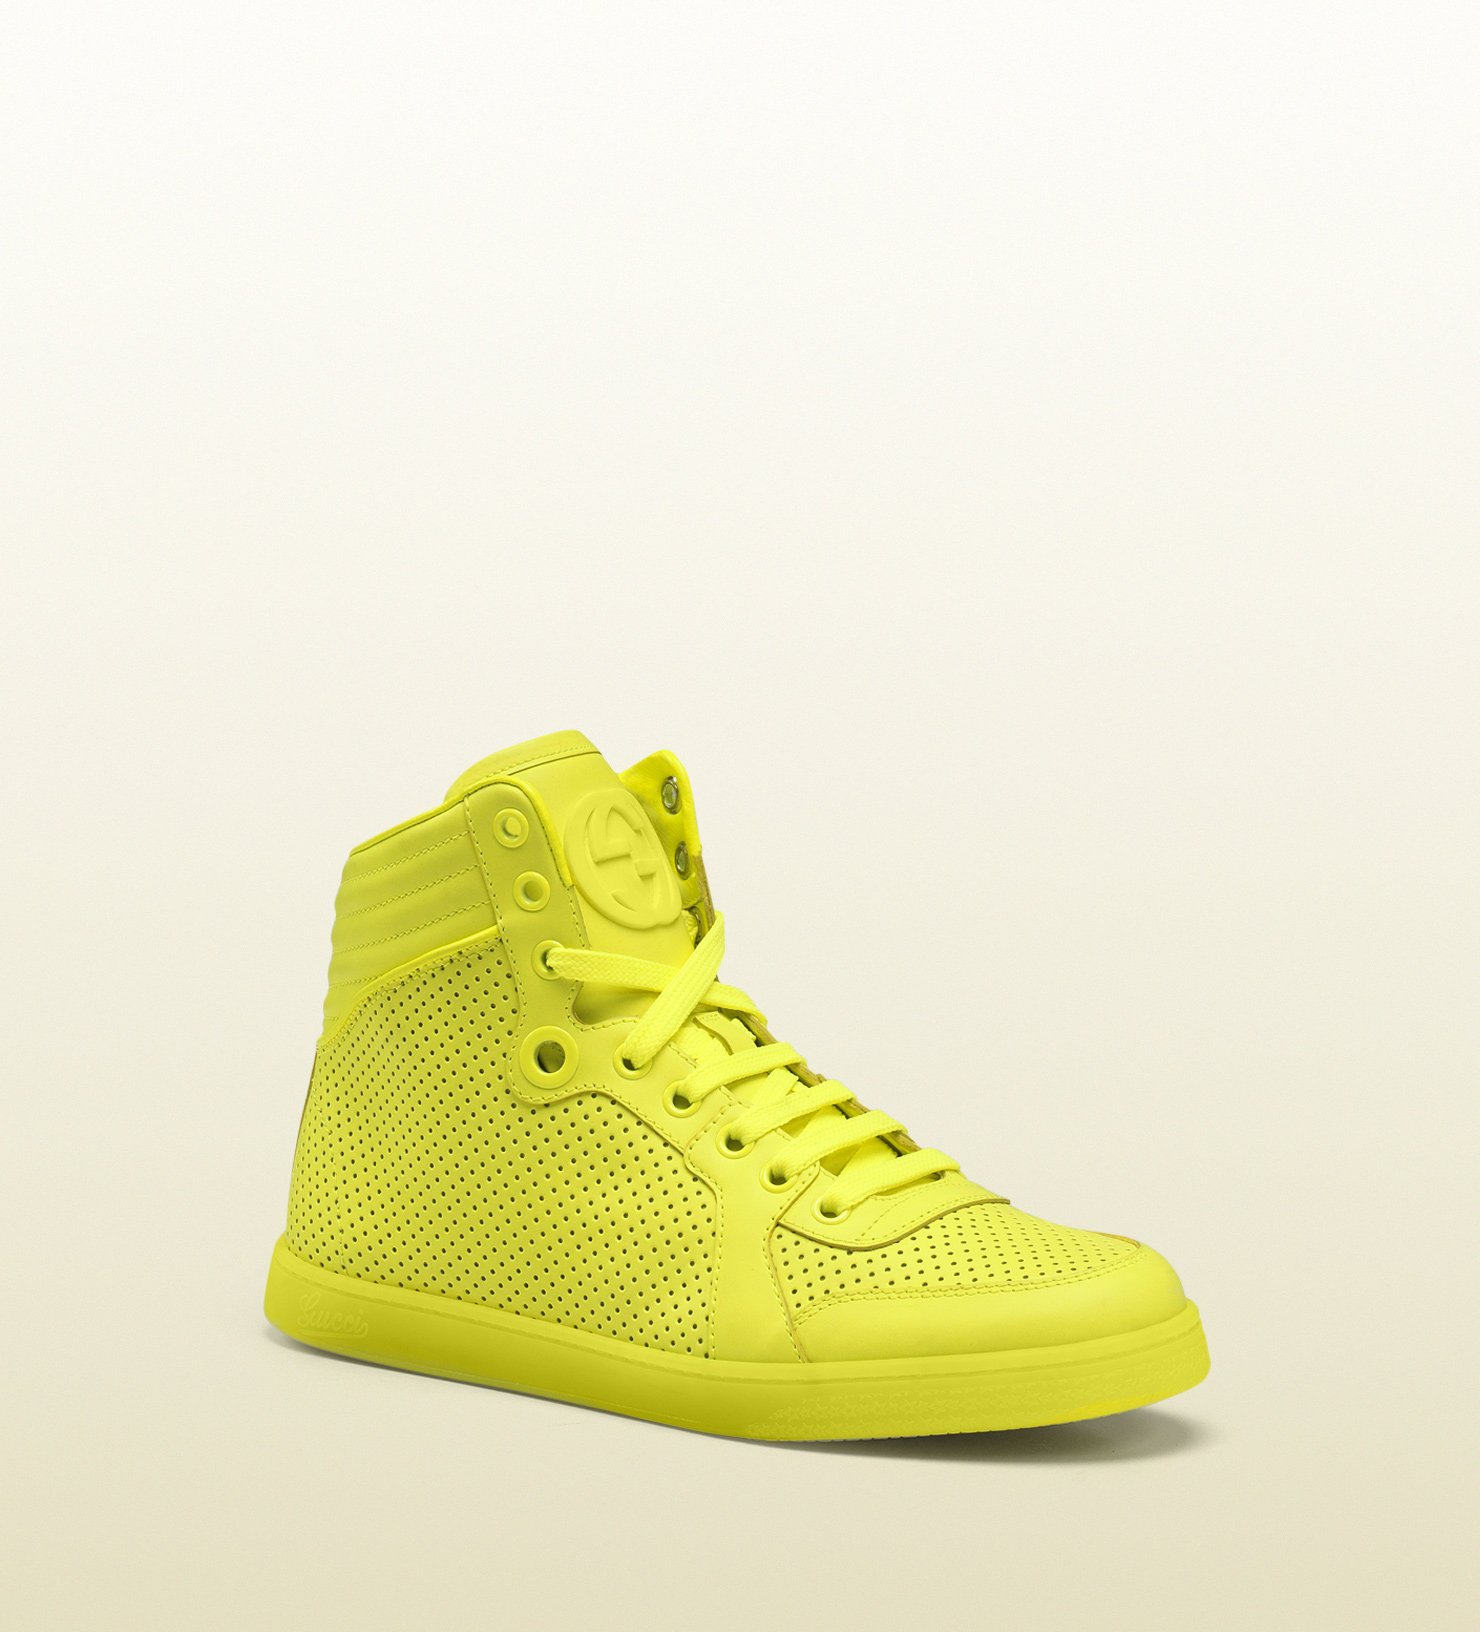 Gucci Coda Neon Yellow Leather Sneaker for Men - Lyst